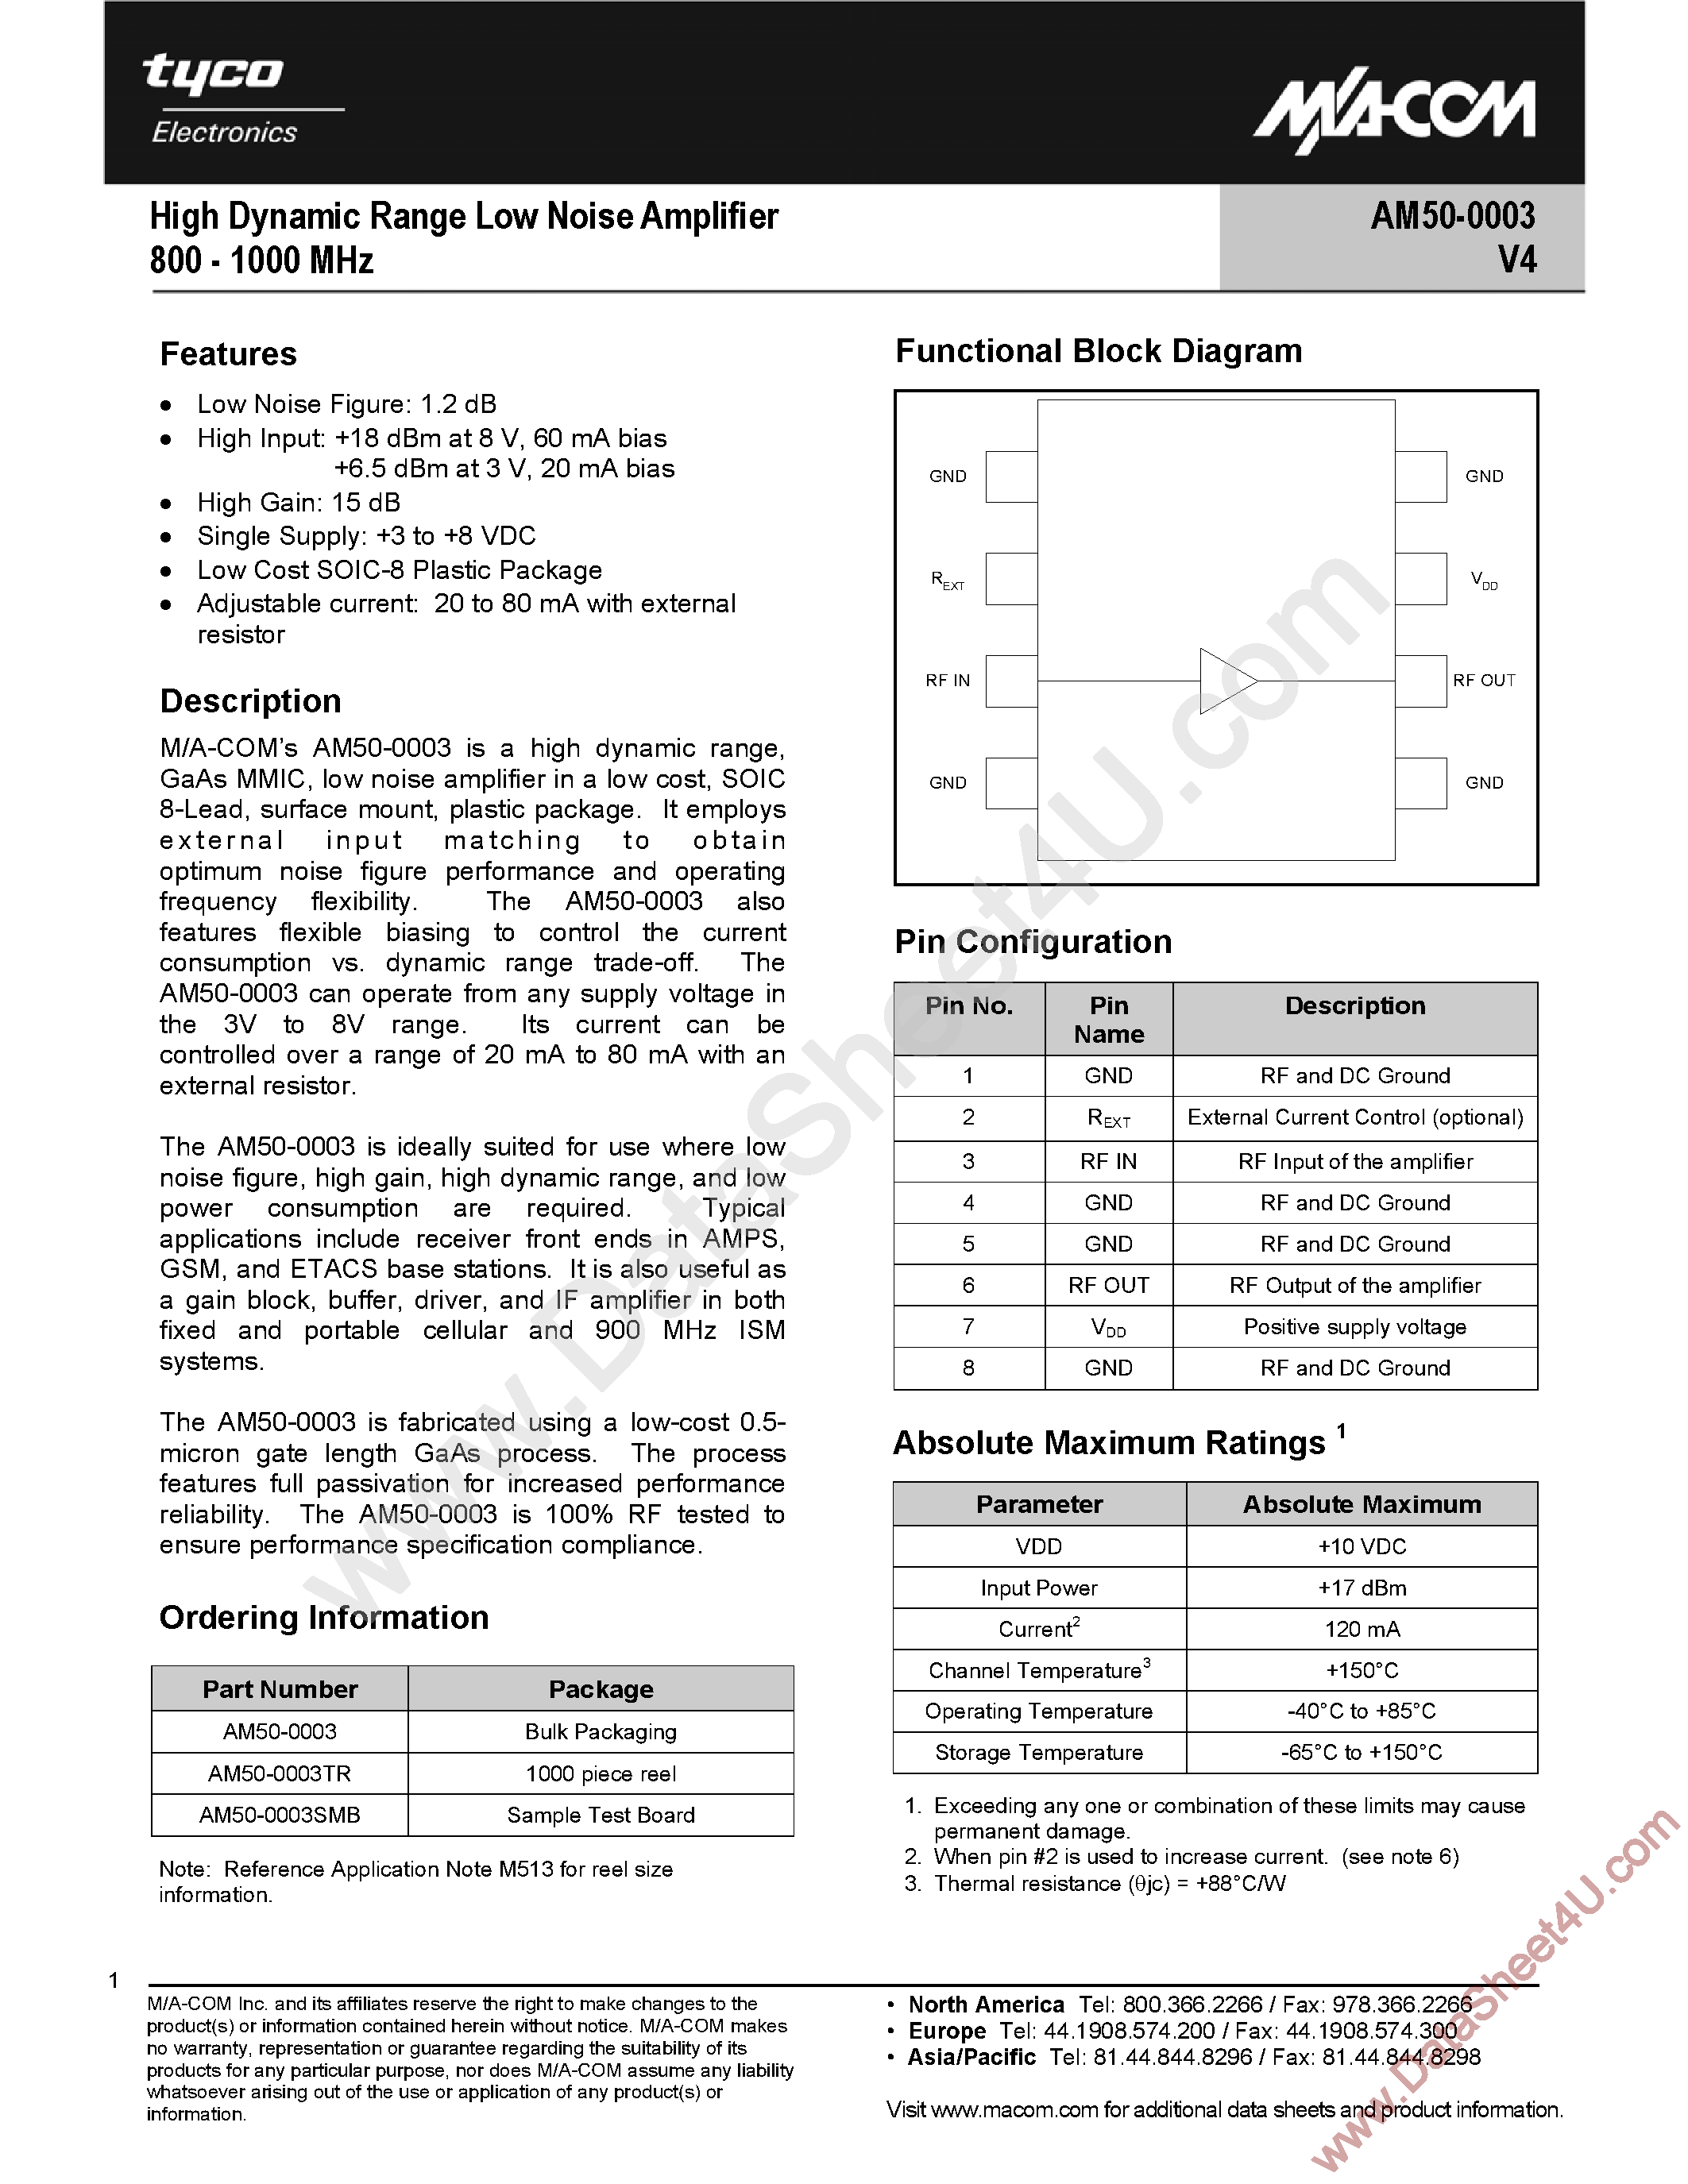 Datasheet AM50-0003V4 - High Dynamic Range Low Noise Amplifier page 1